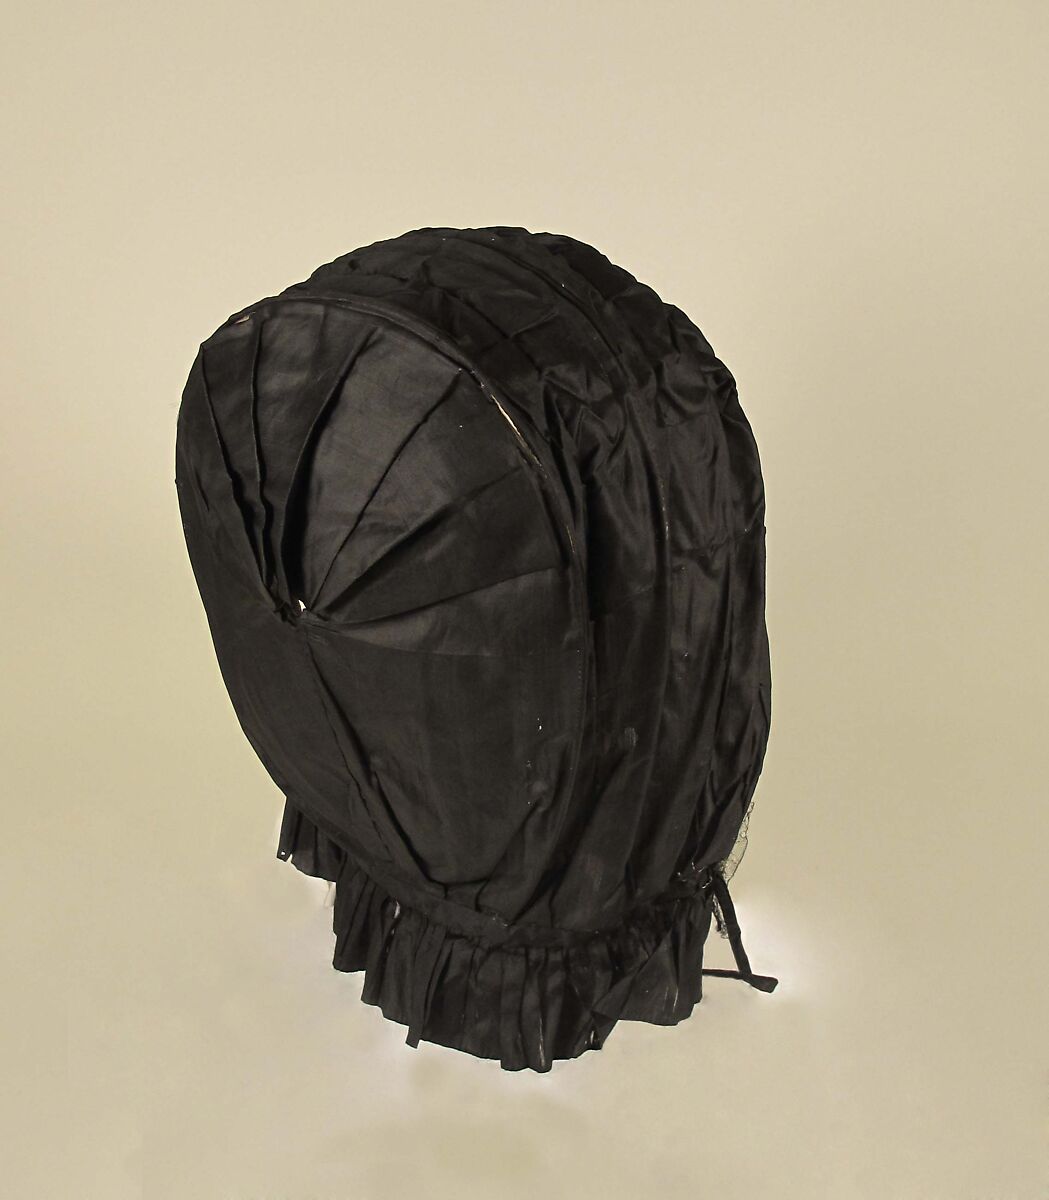 Bonnet, silk, probably British 